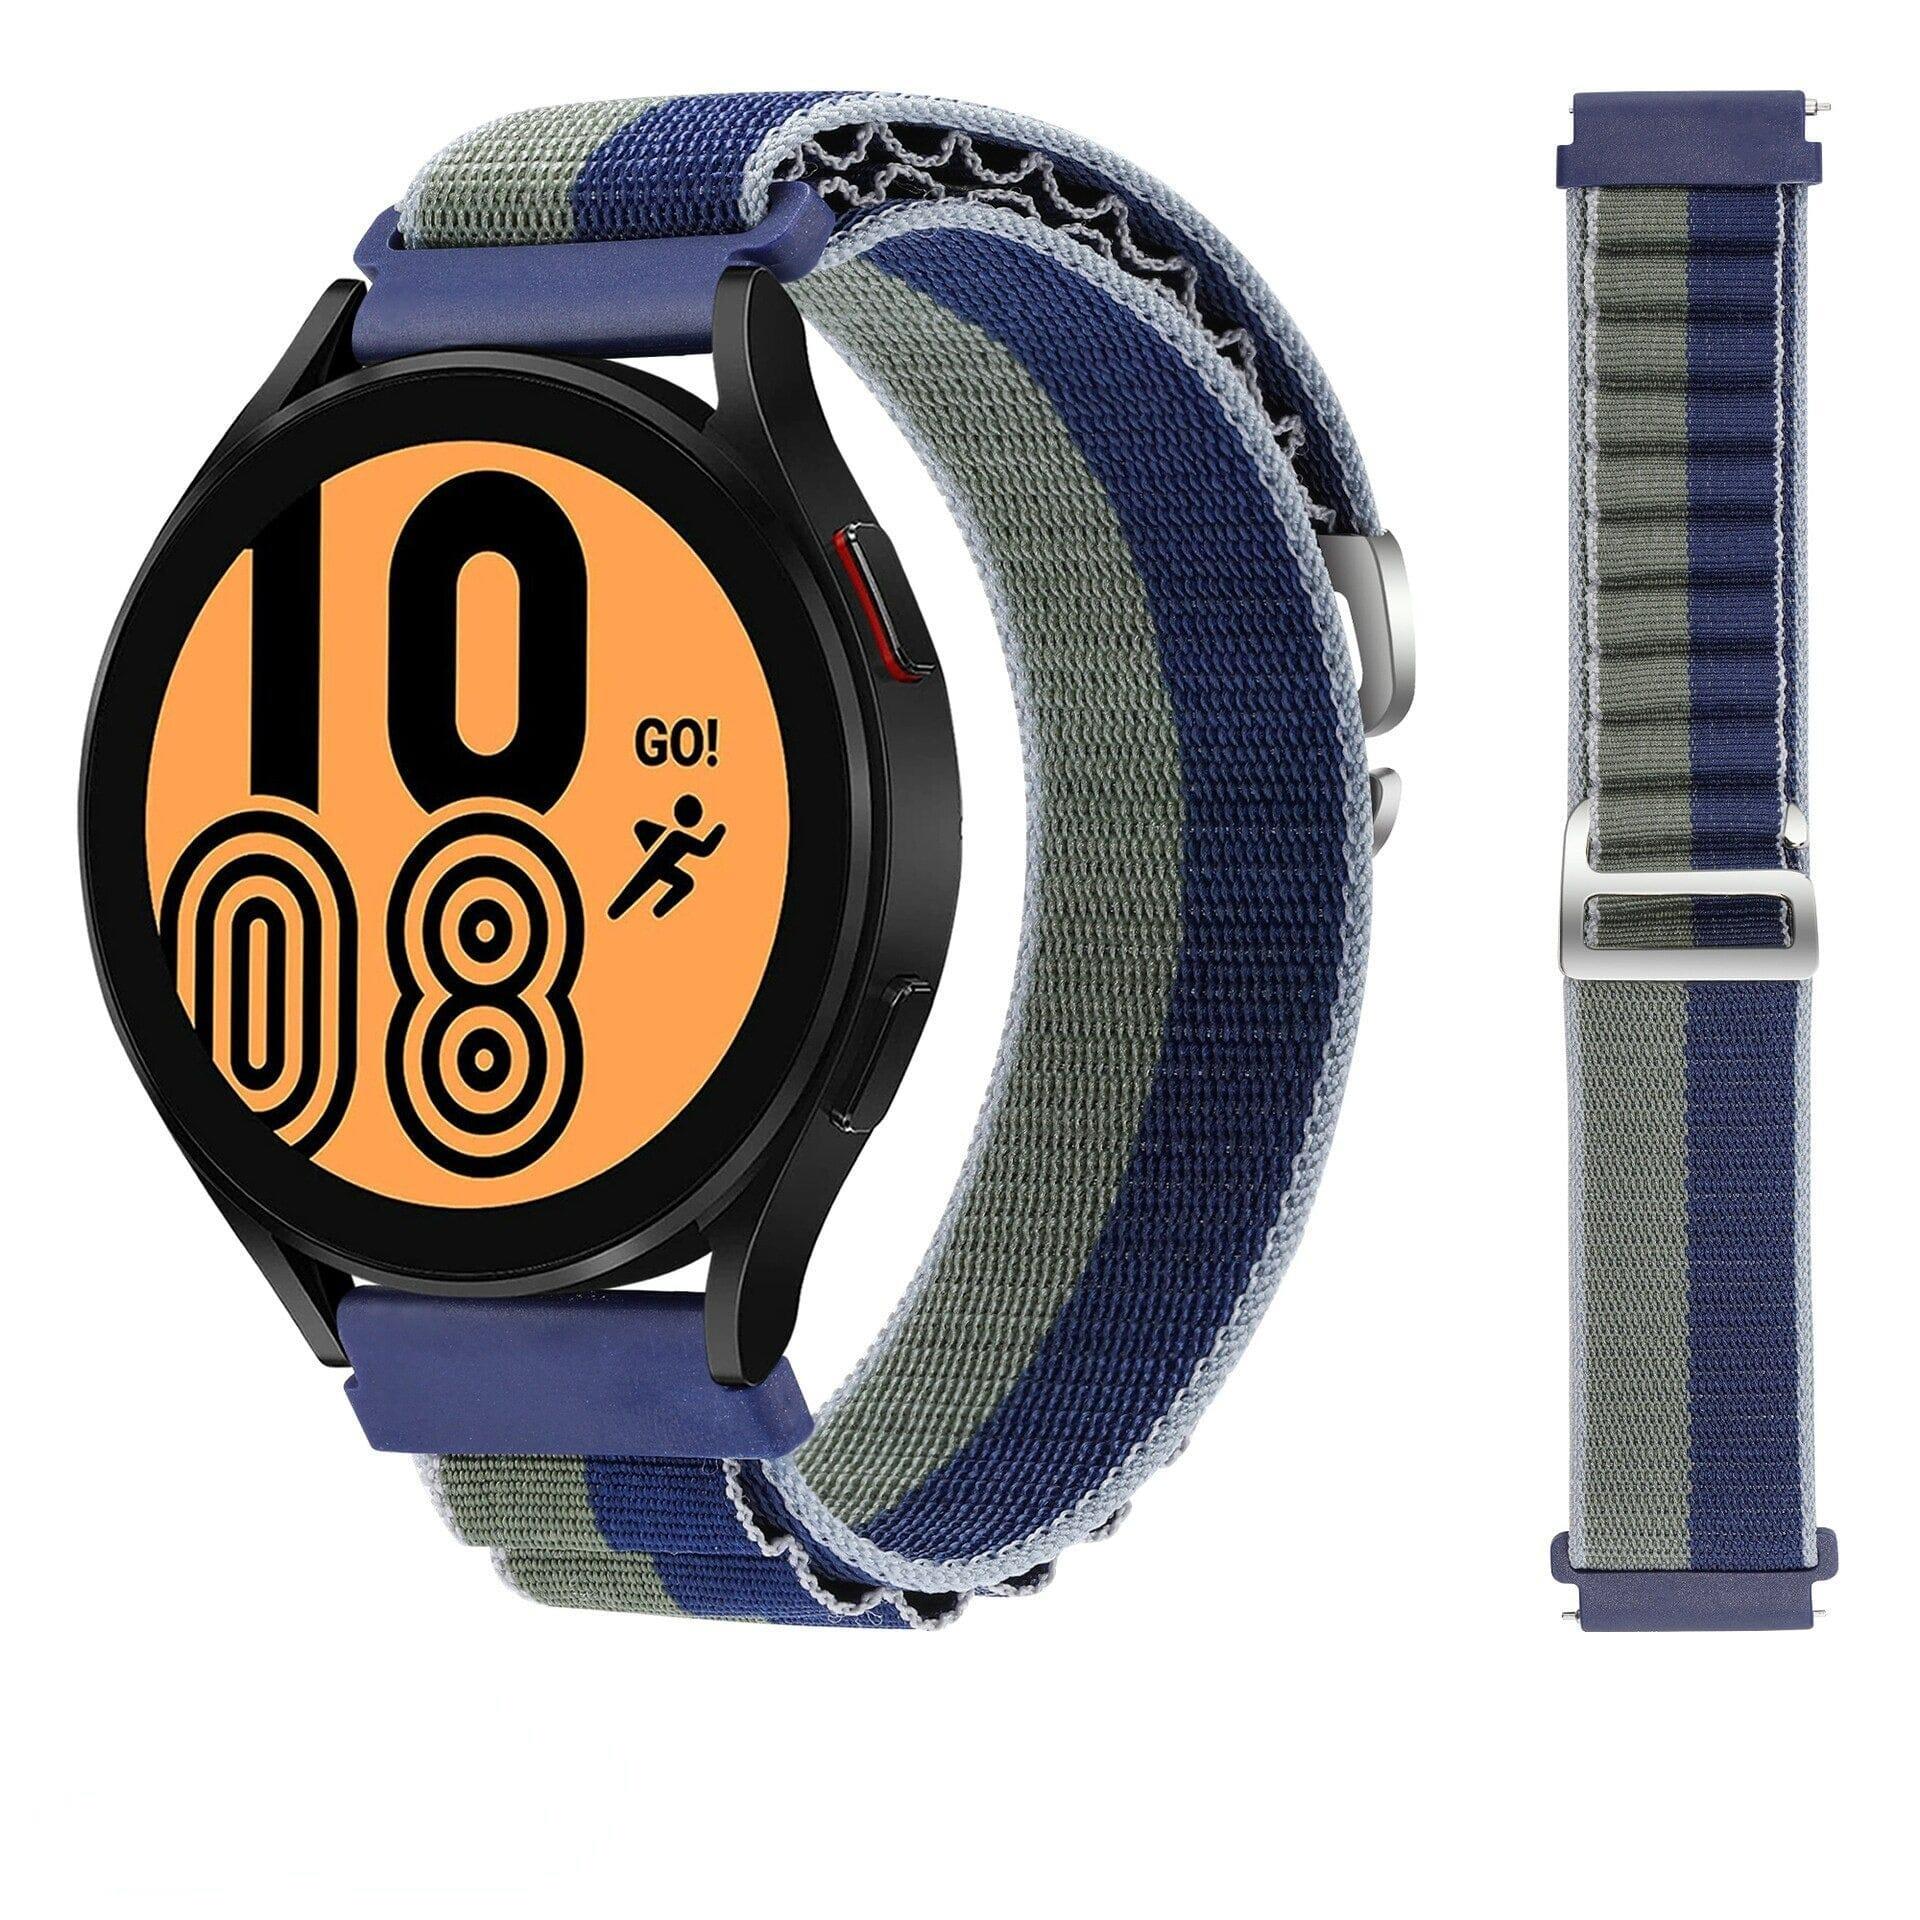 Alpine Loop Watch Straps Compatible with the Nixon 22mm Range